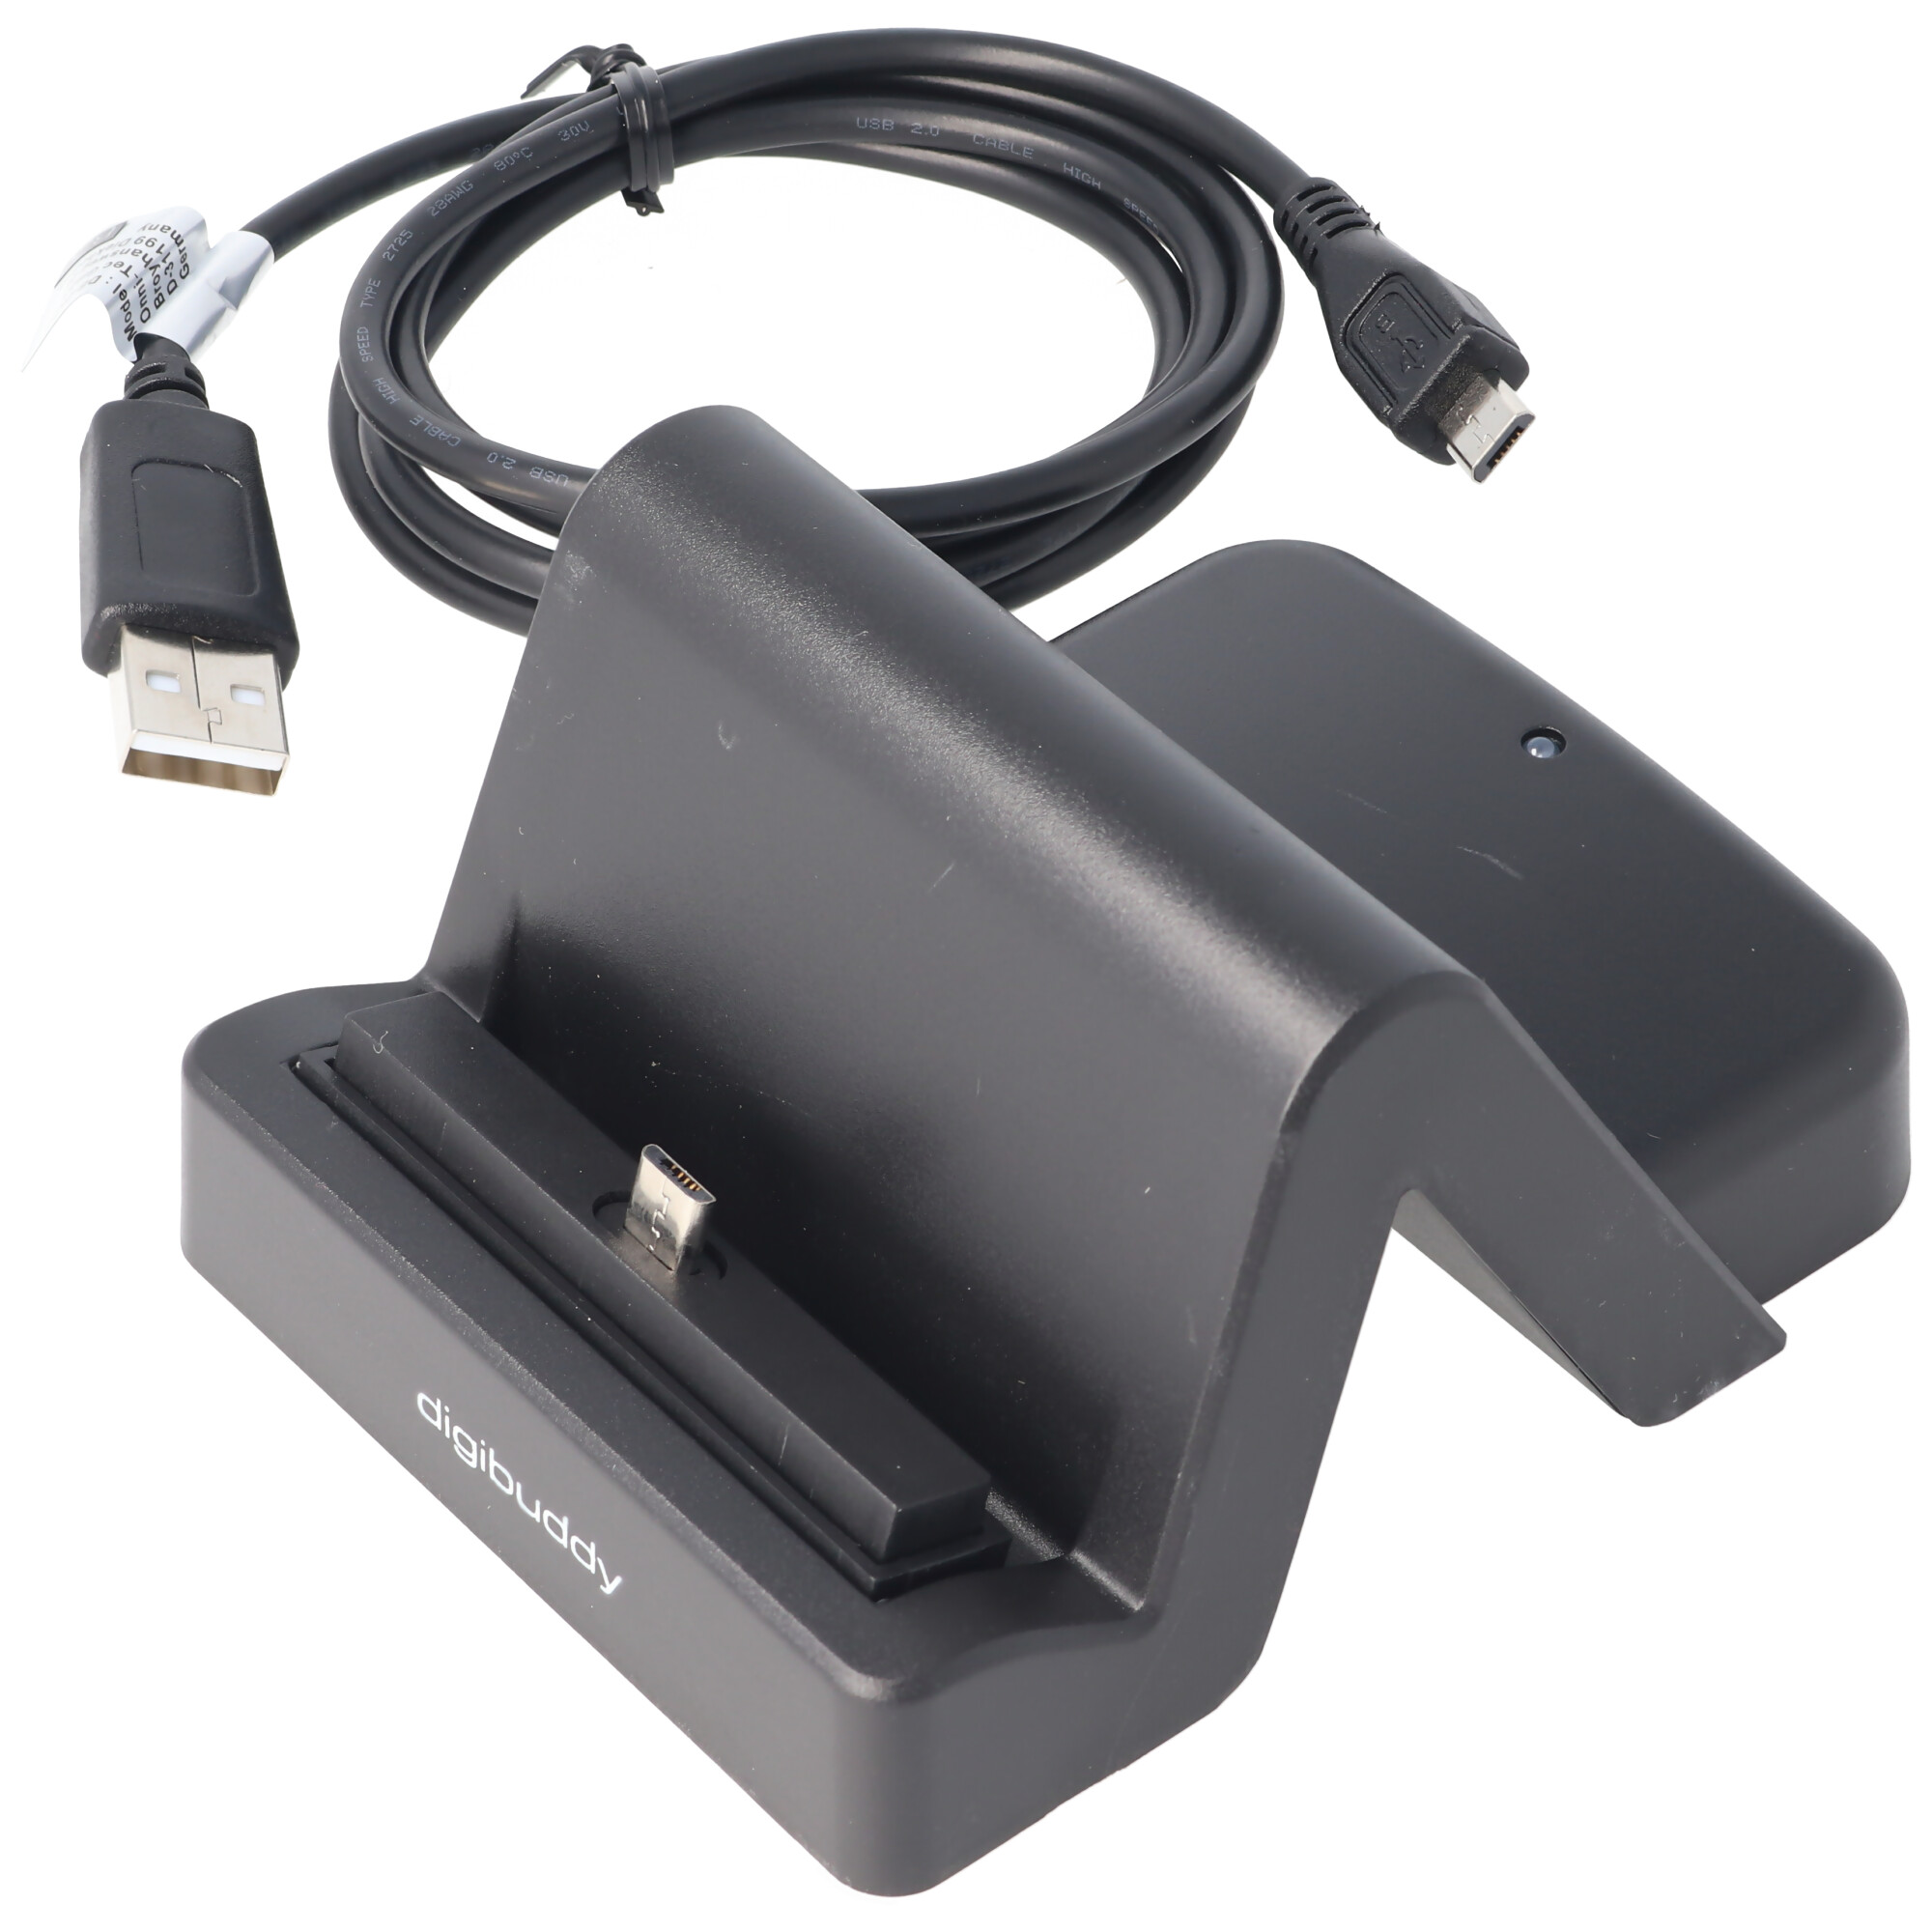 USB Dockingstation mit variablem Micro-USB Anschluss